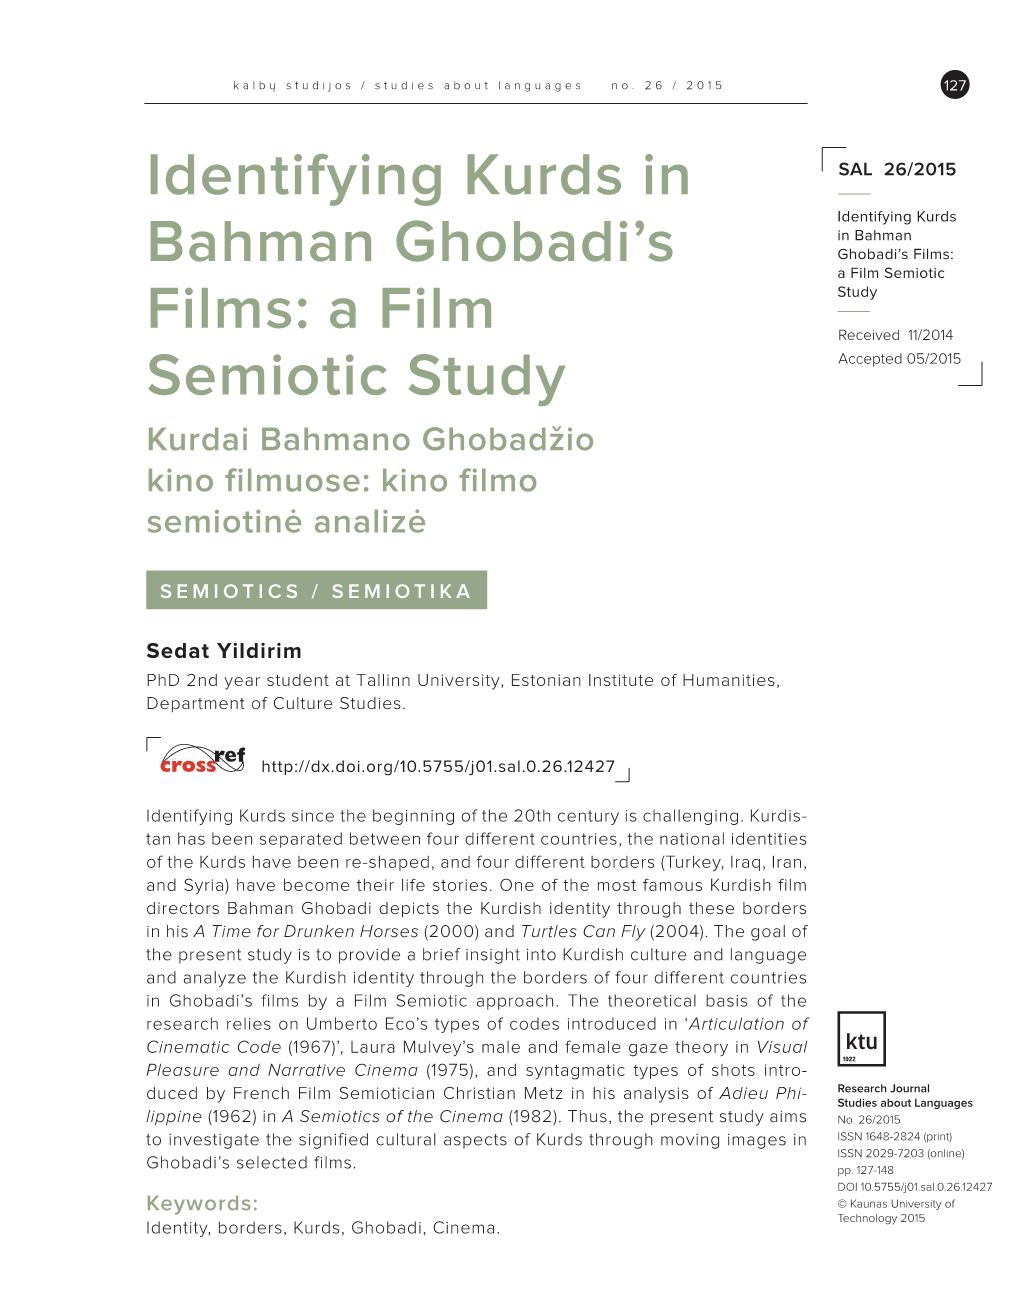 Identifying Kurds in Bahman Ghobadi's Films